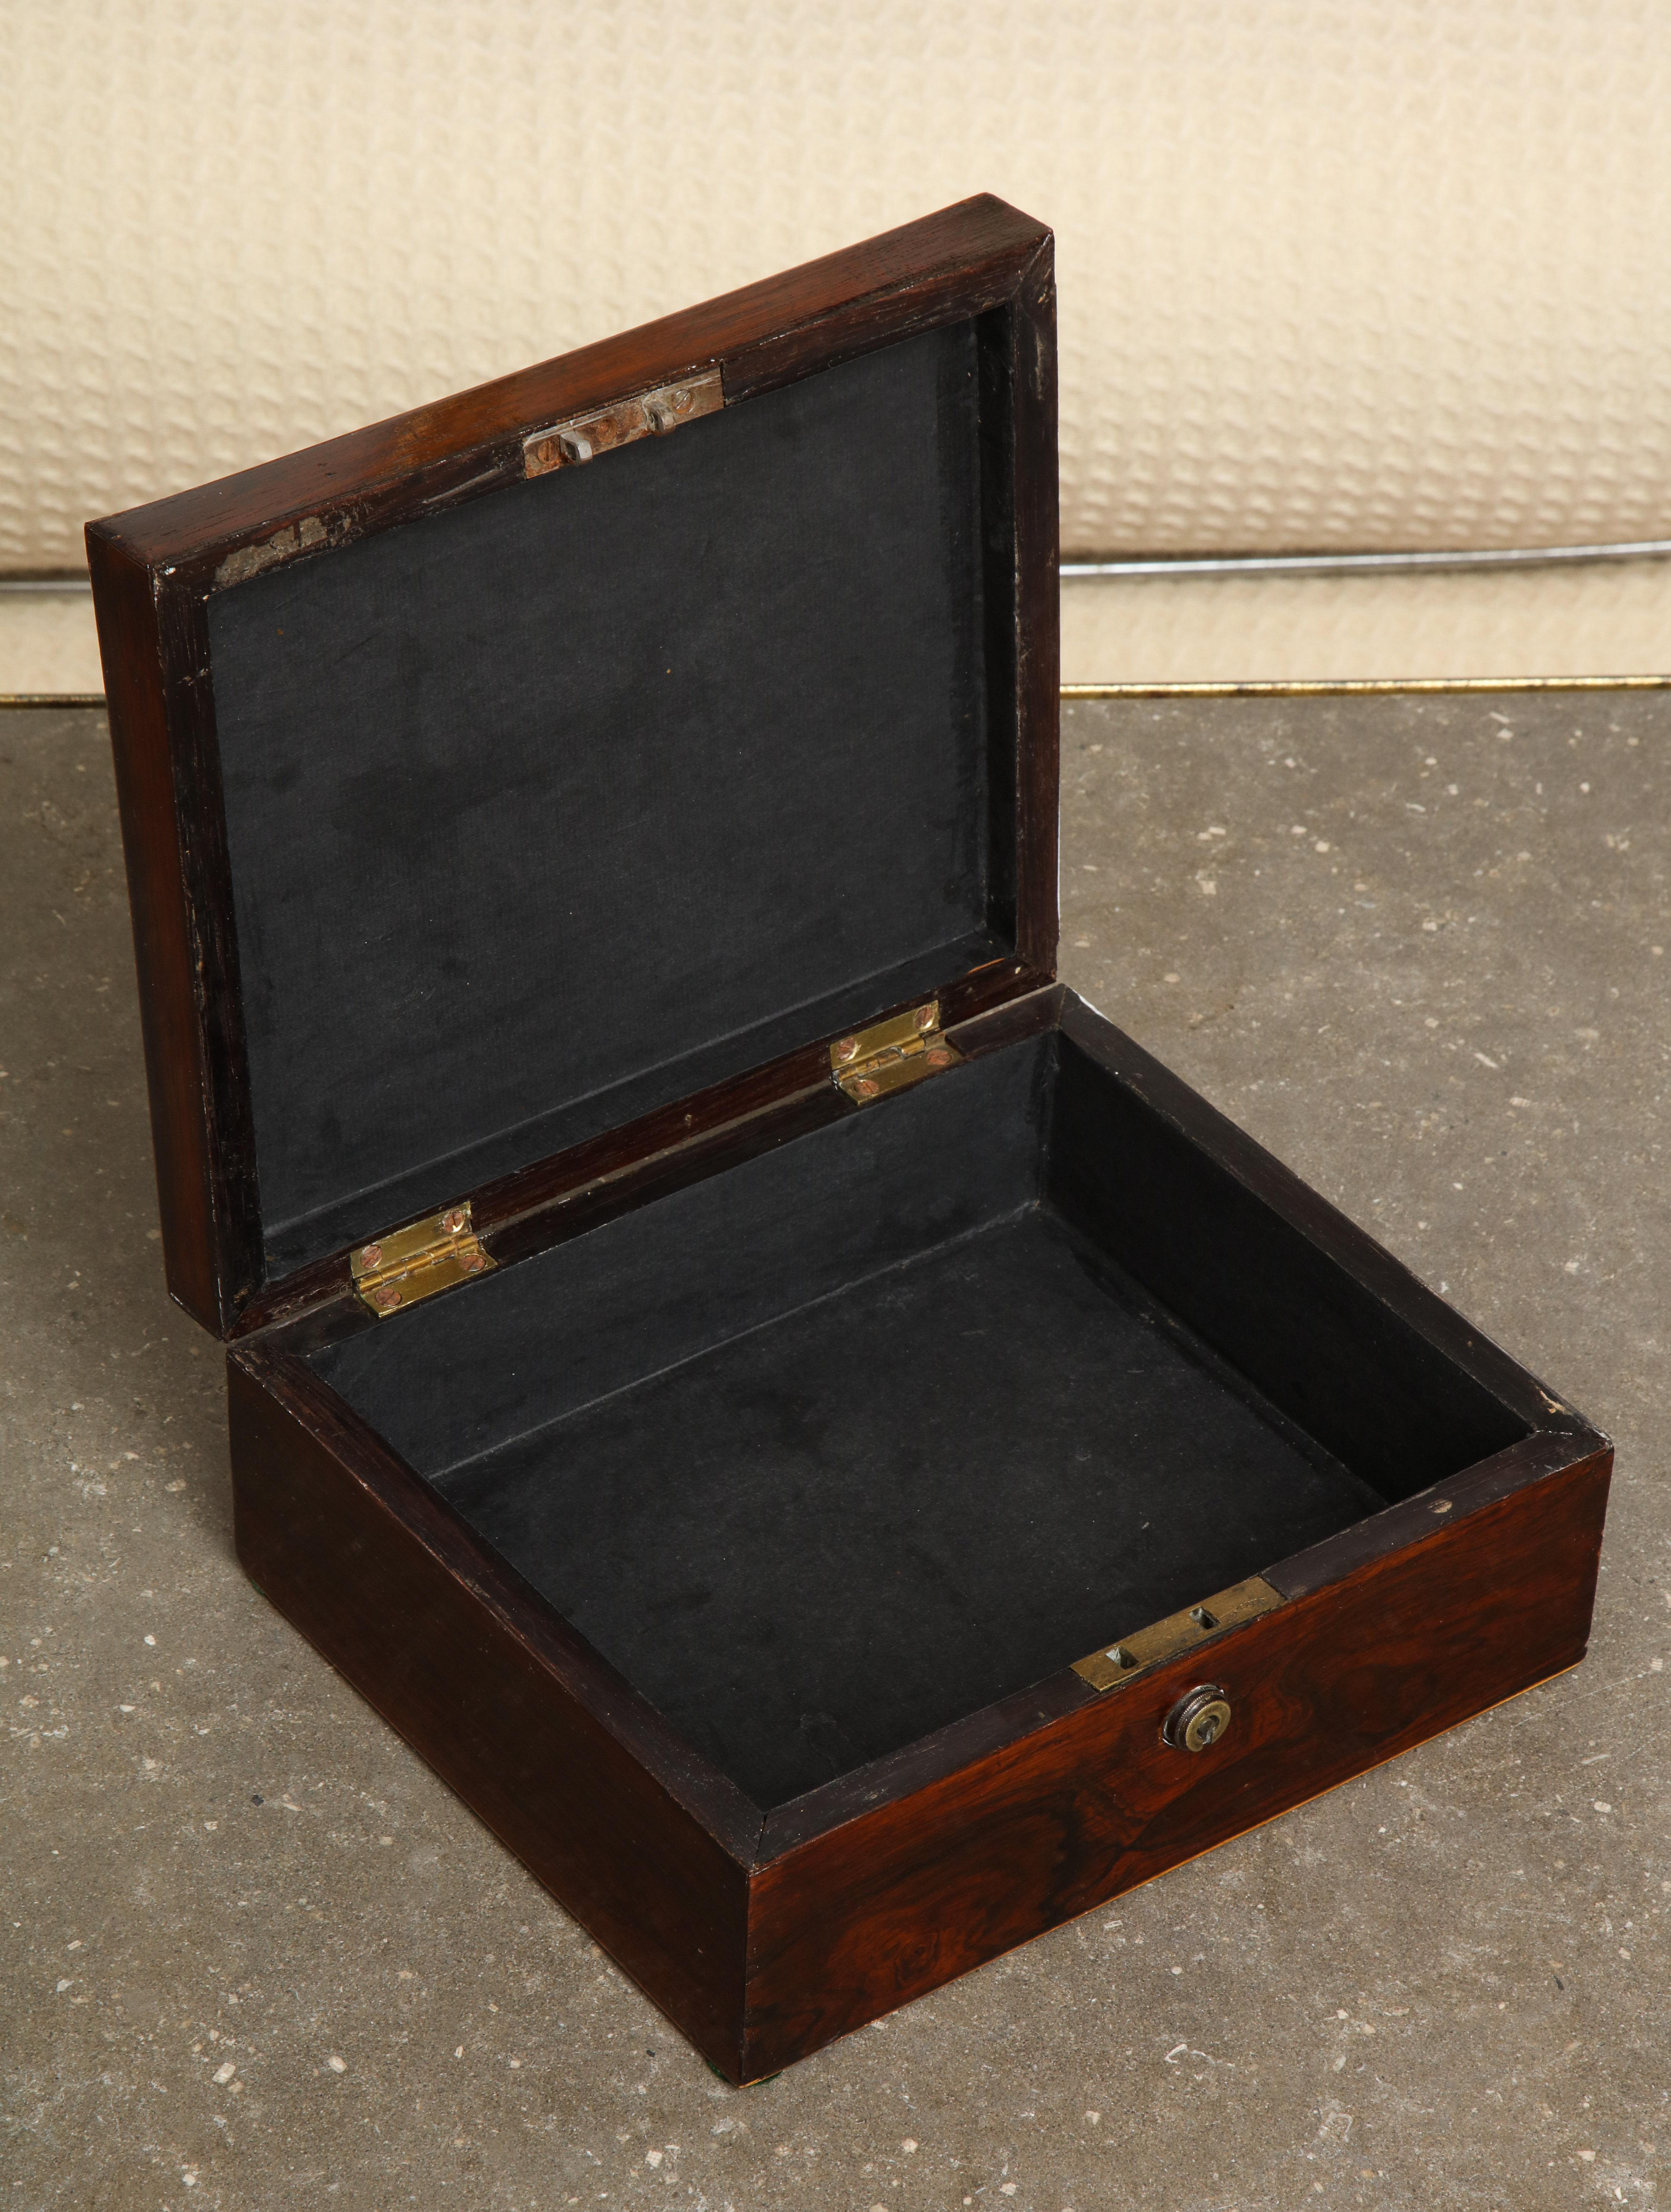 High Victorian 19th Century English Mahogany Trinket Box with Inlaid Border